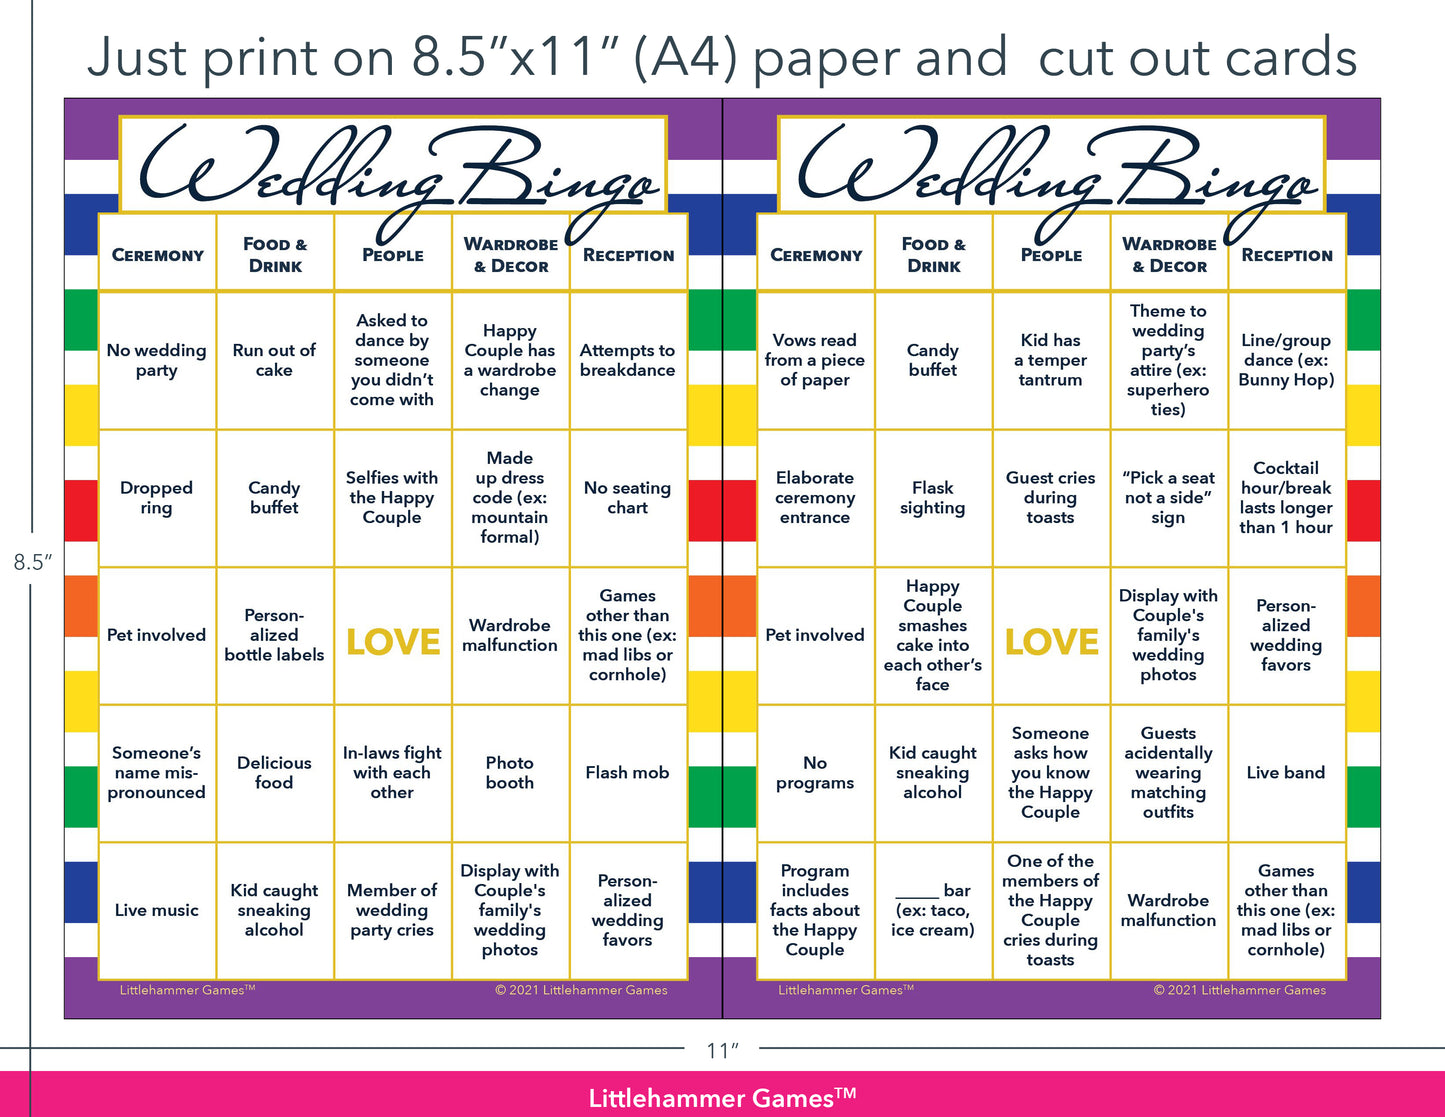 Rainbow-striped Wedding Bingo game cards with printing instructions